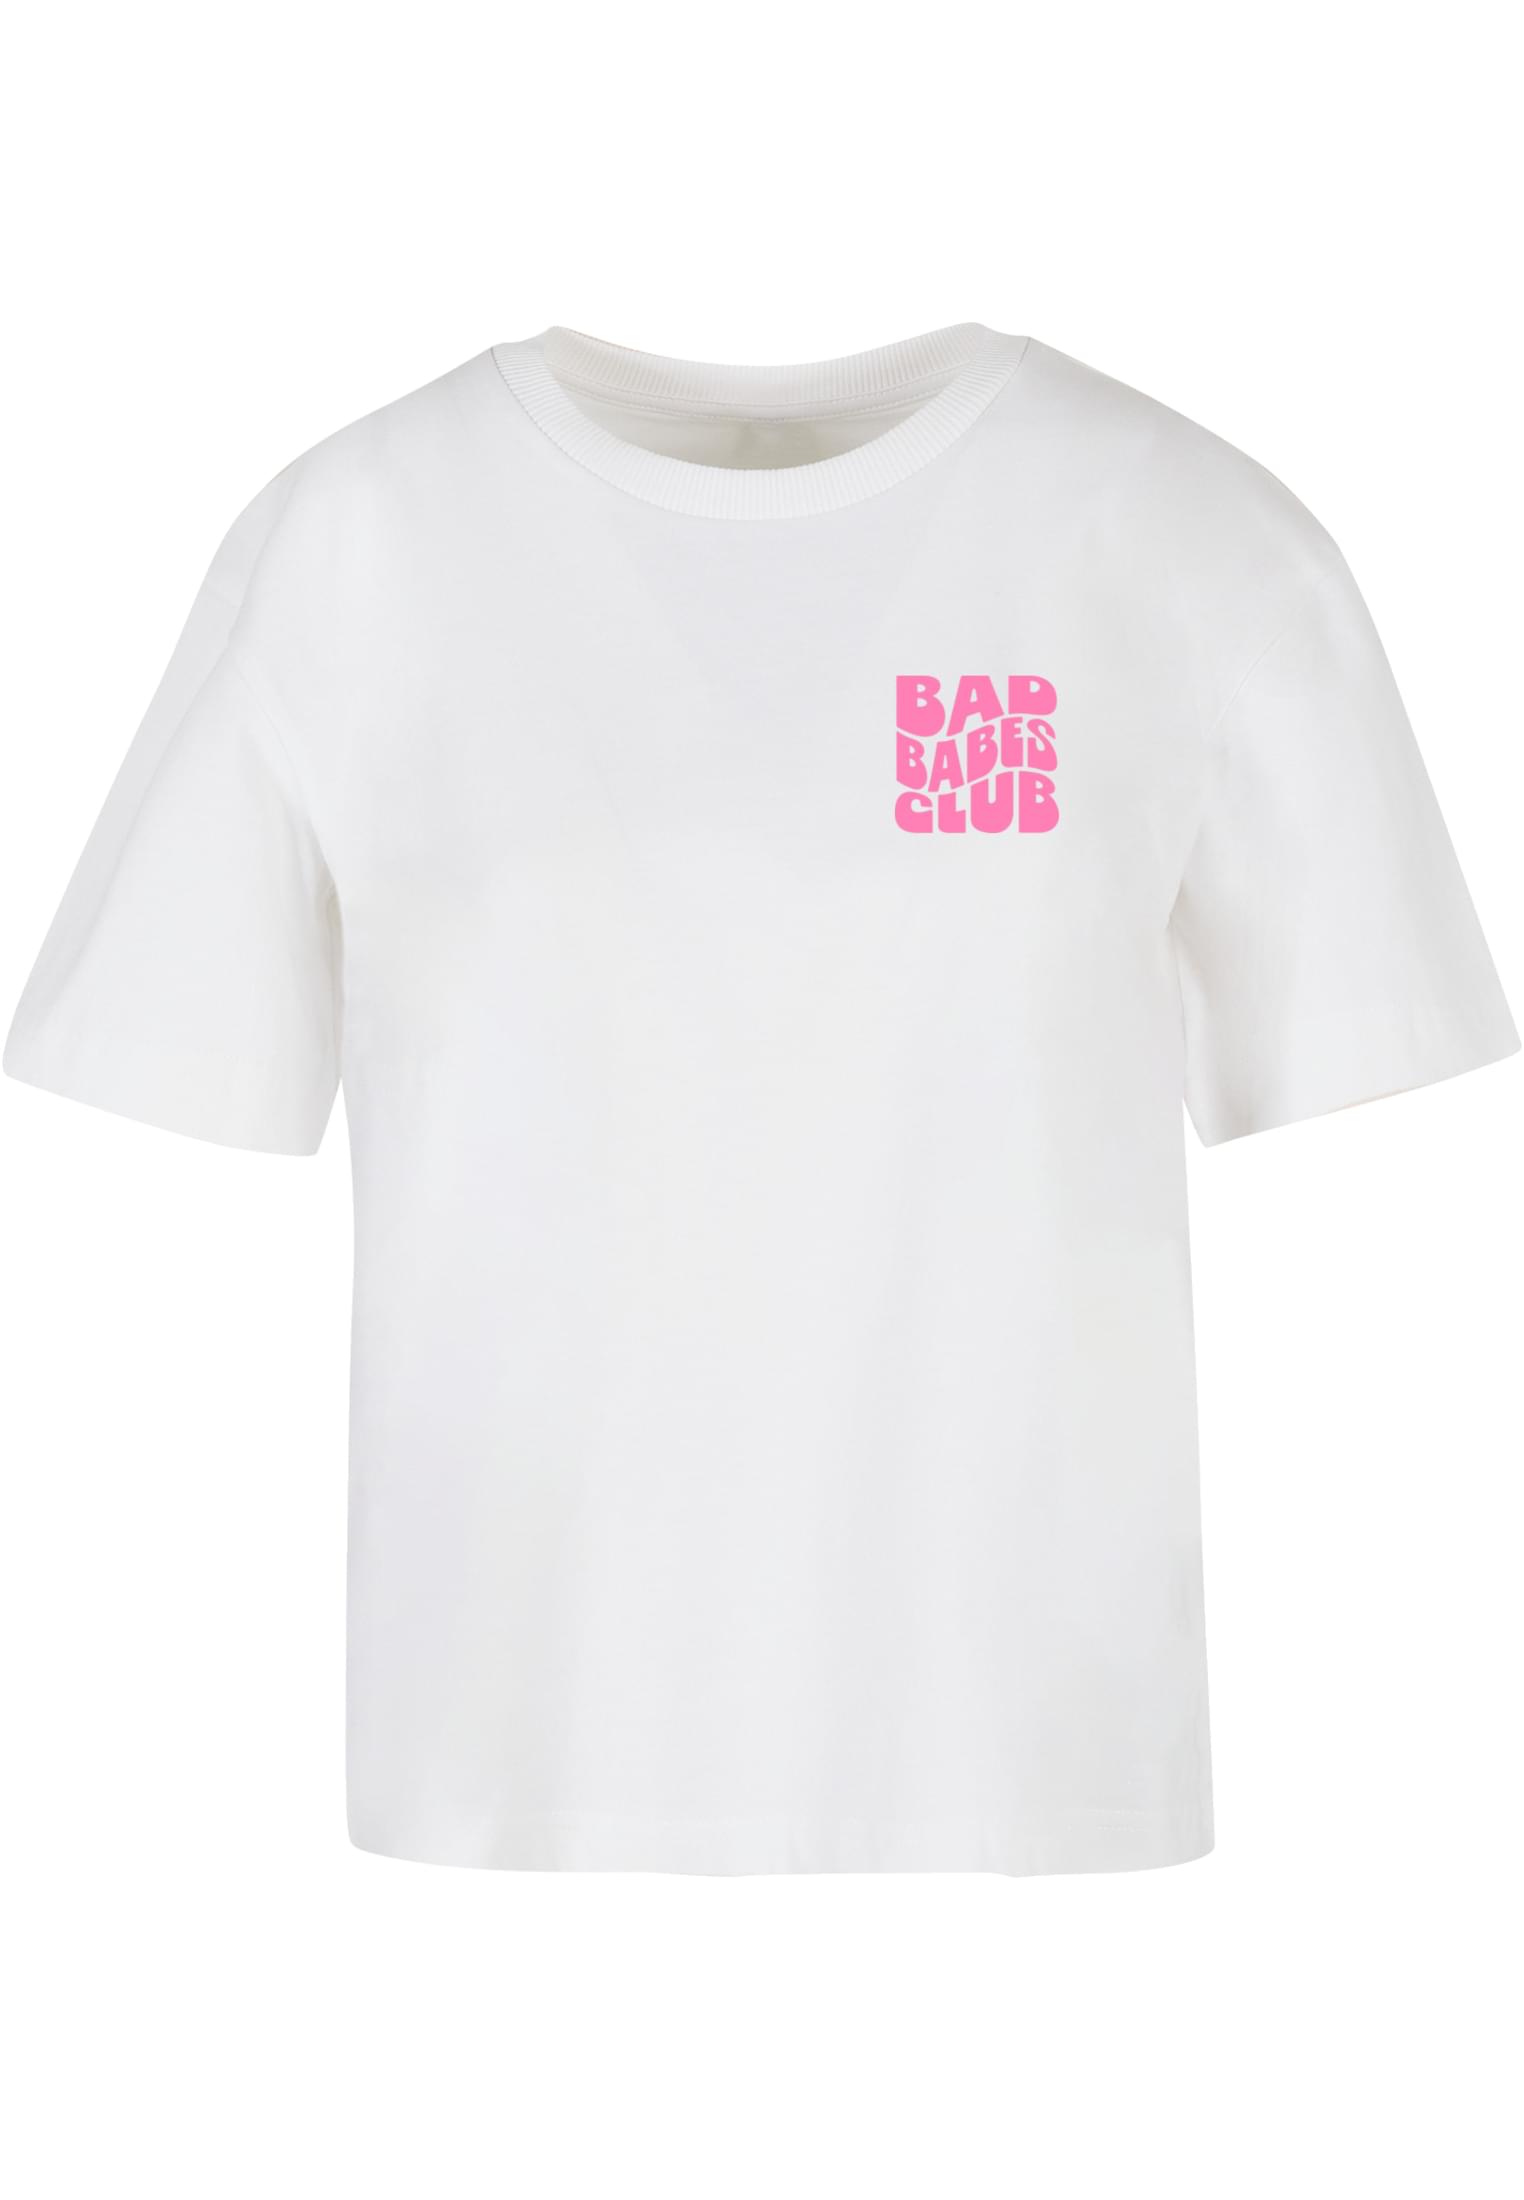 Women's T-shirt Bad Babes Club - white